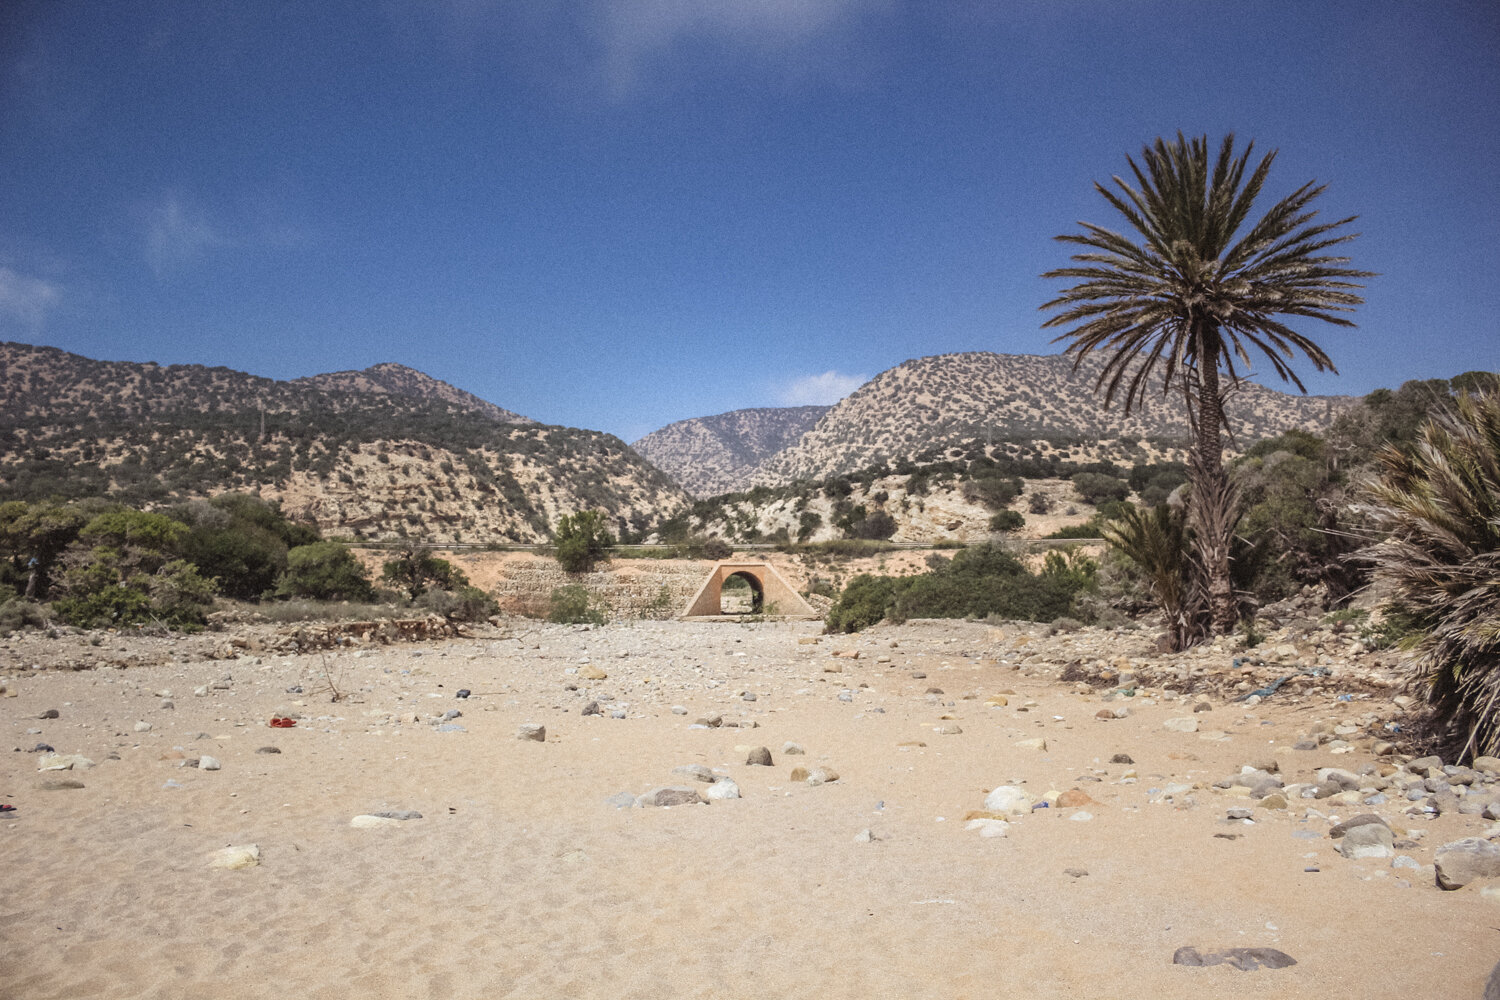 2014.05.01 - Agadir - Location Scouting (Nina Canon 60D) 14- LR (JPG 1500px 72DPI).jpg